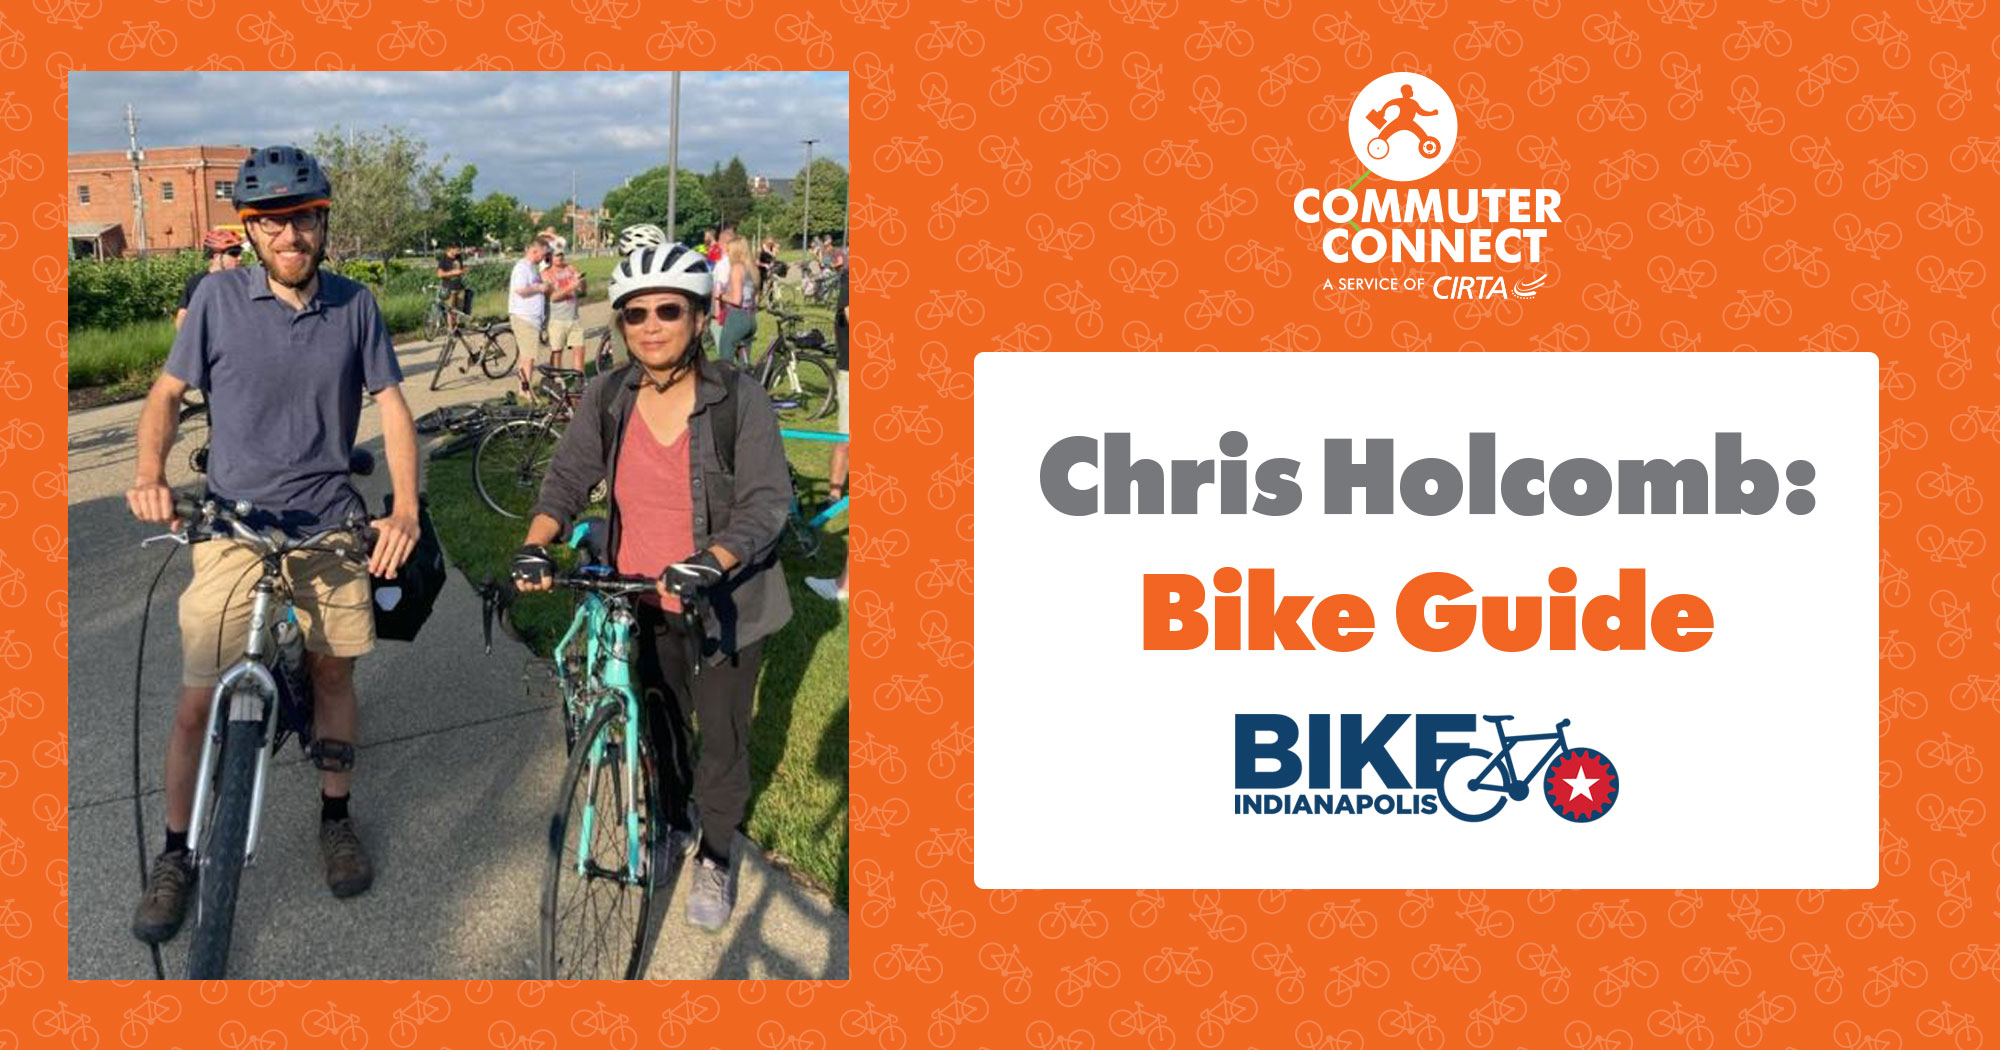 Bike Guide Profile: Chris Holcomb